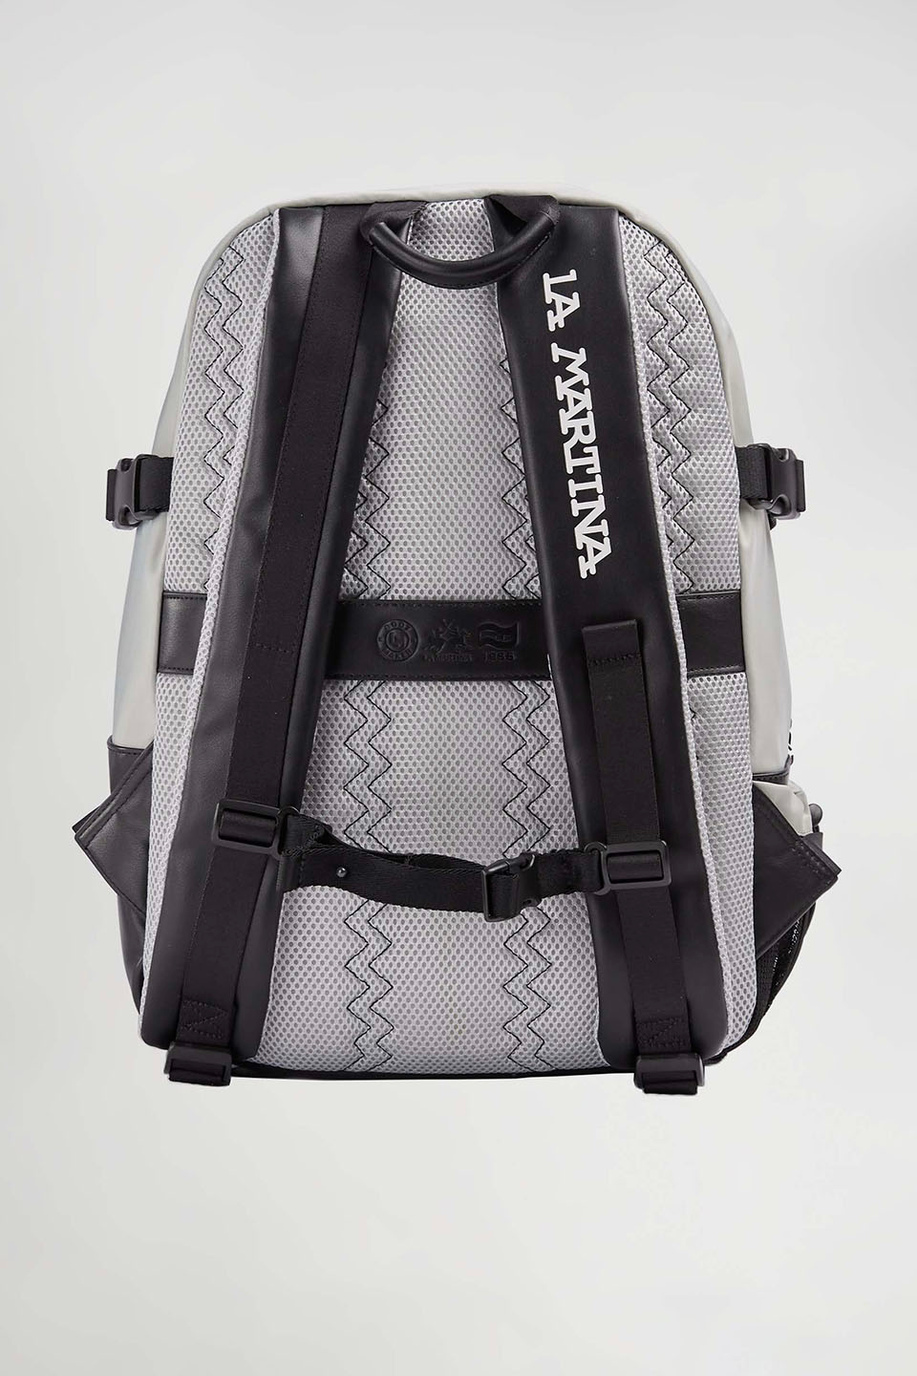 Nylon backpack - Accessories Man | La Martina - Official Online Shop